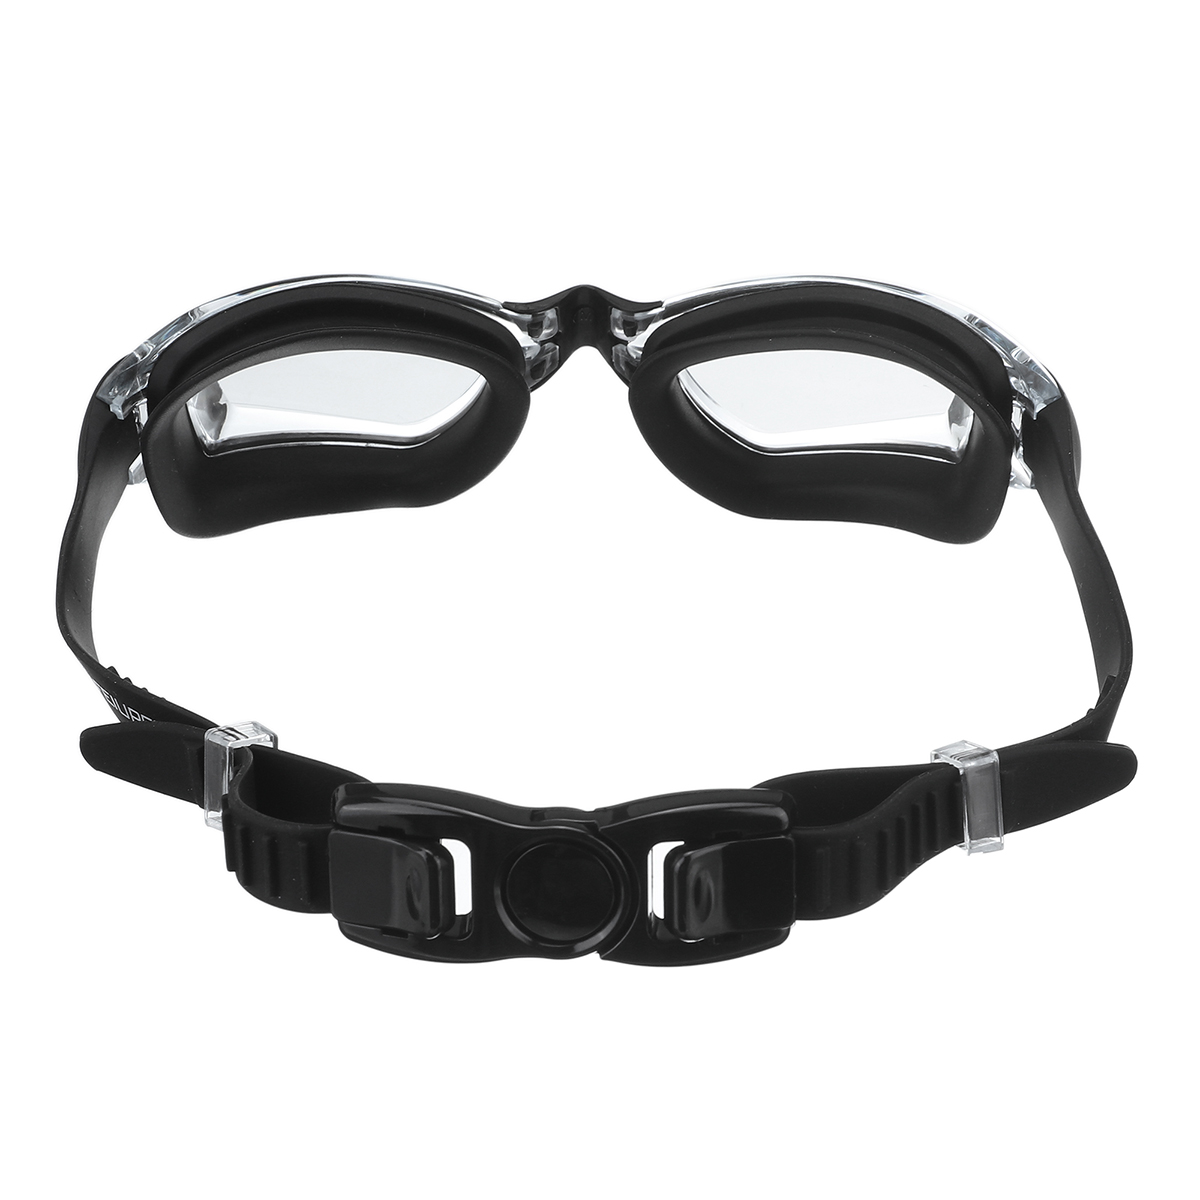 Swimming-Goggles-Anti-fog-Anti-UV-Fog-Protection-No-Leaking-Clear-Wide-Vision-Eye-Pool-Swim-Glassess-1723669-2